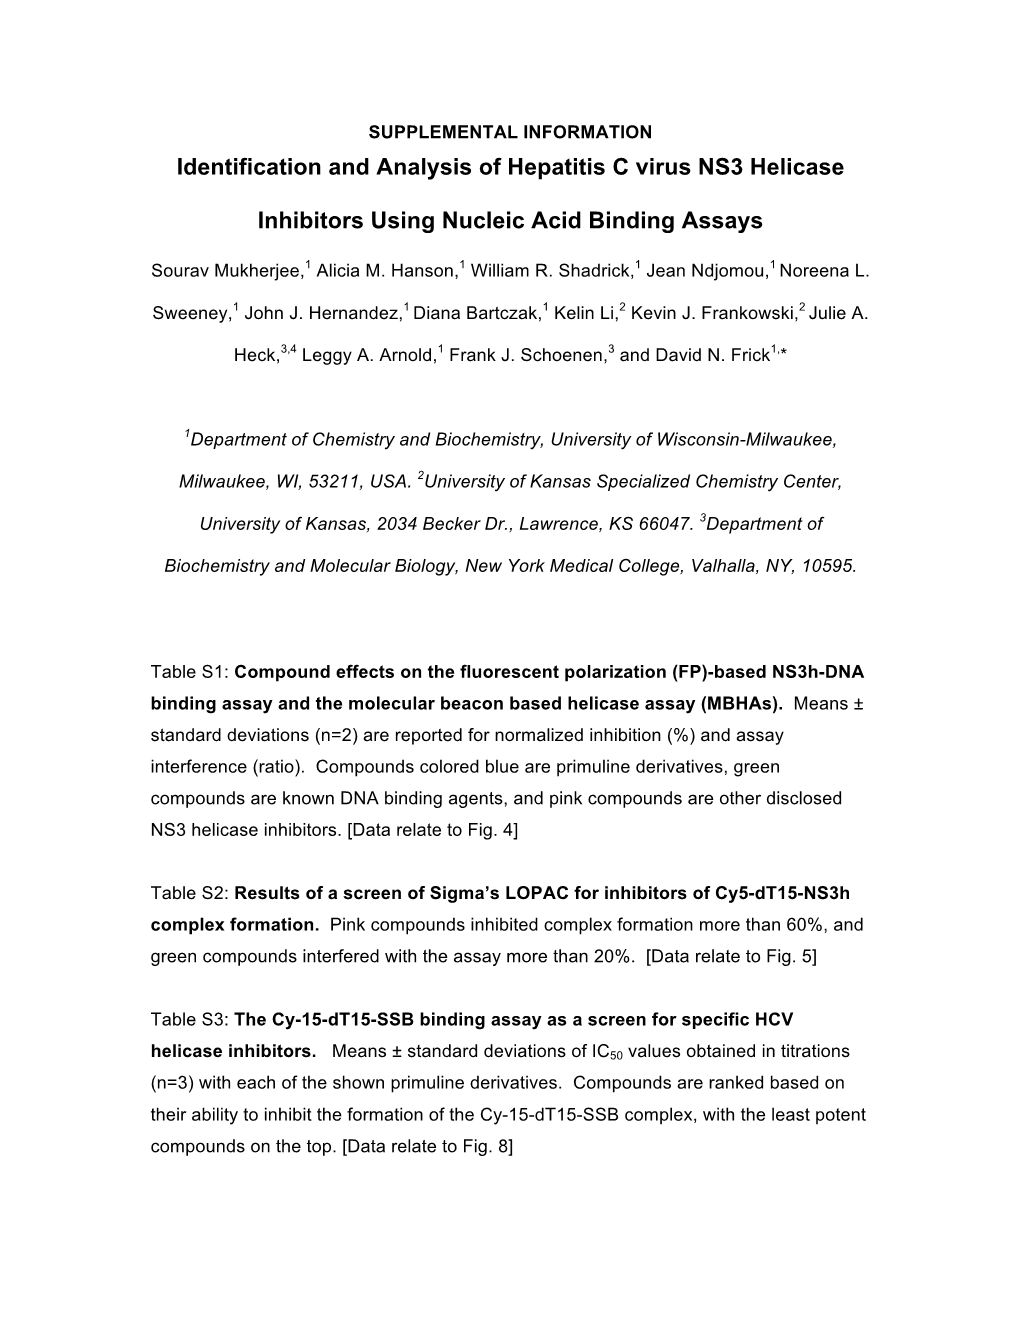 Identification and Analysis of Hepatitis C Virus NS3 Helicase Inhibitors Using Nucleic Acid Binding Assays